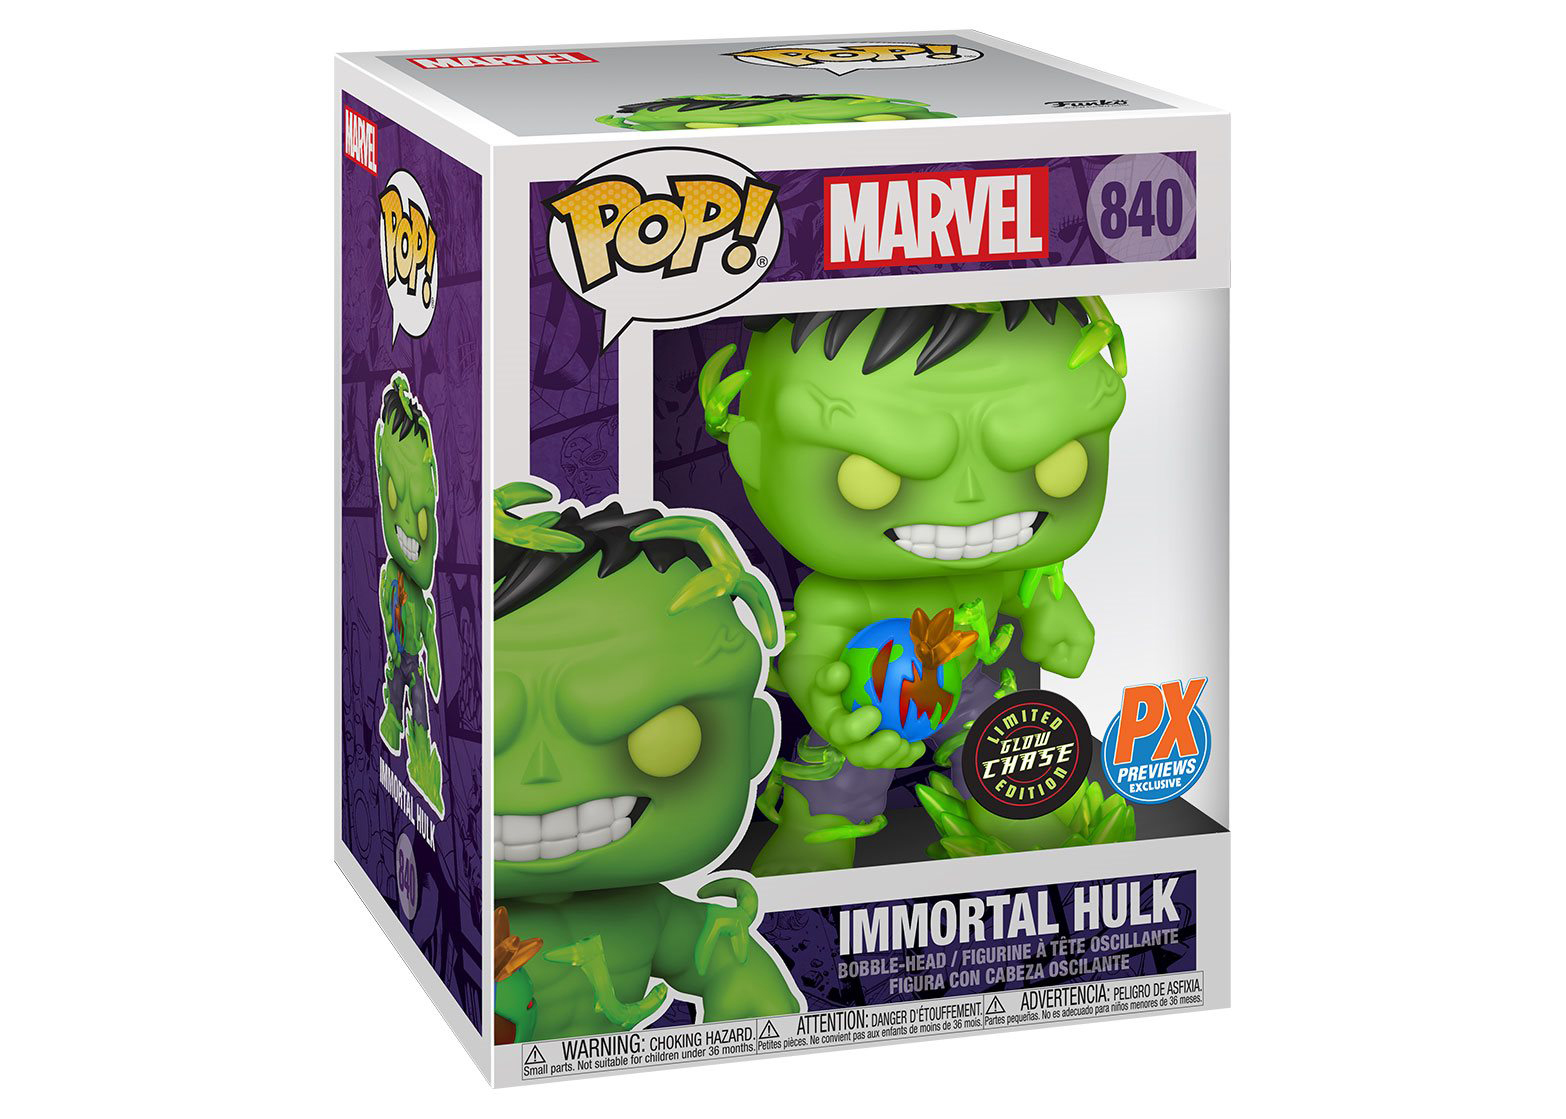 Marvel Super Heroes The Immortal Hulk 6" GITD CHASE Vinyl Figure 840 Funko Pop 